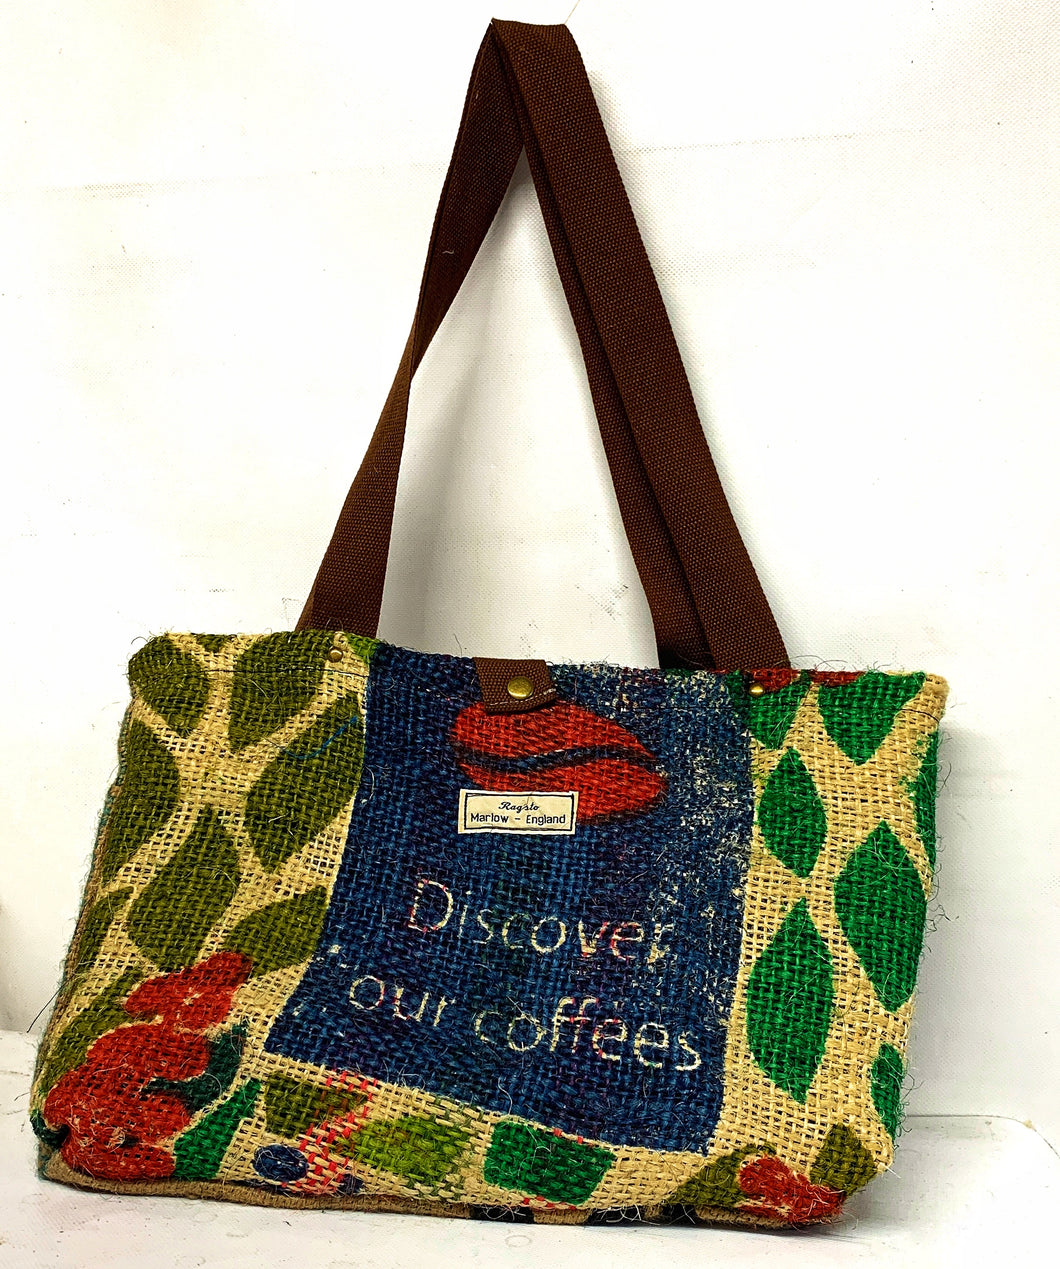 Upcycled Coffee Tote Bag - eco & green!